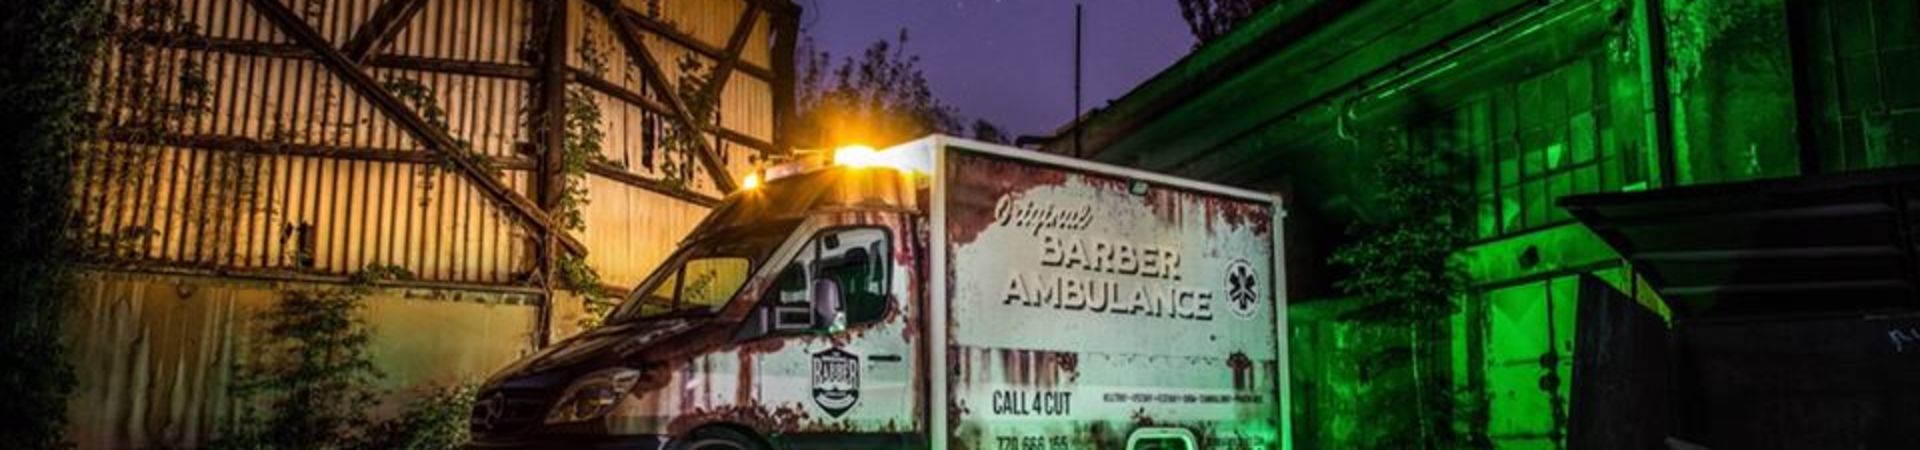 Original Barber Ambulance